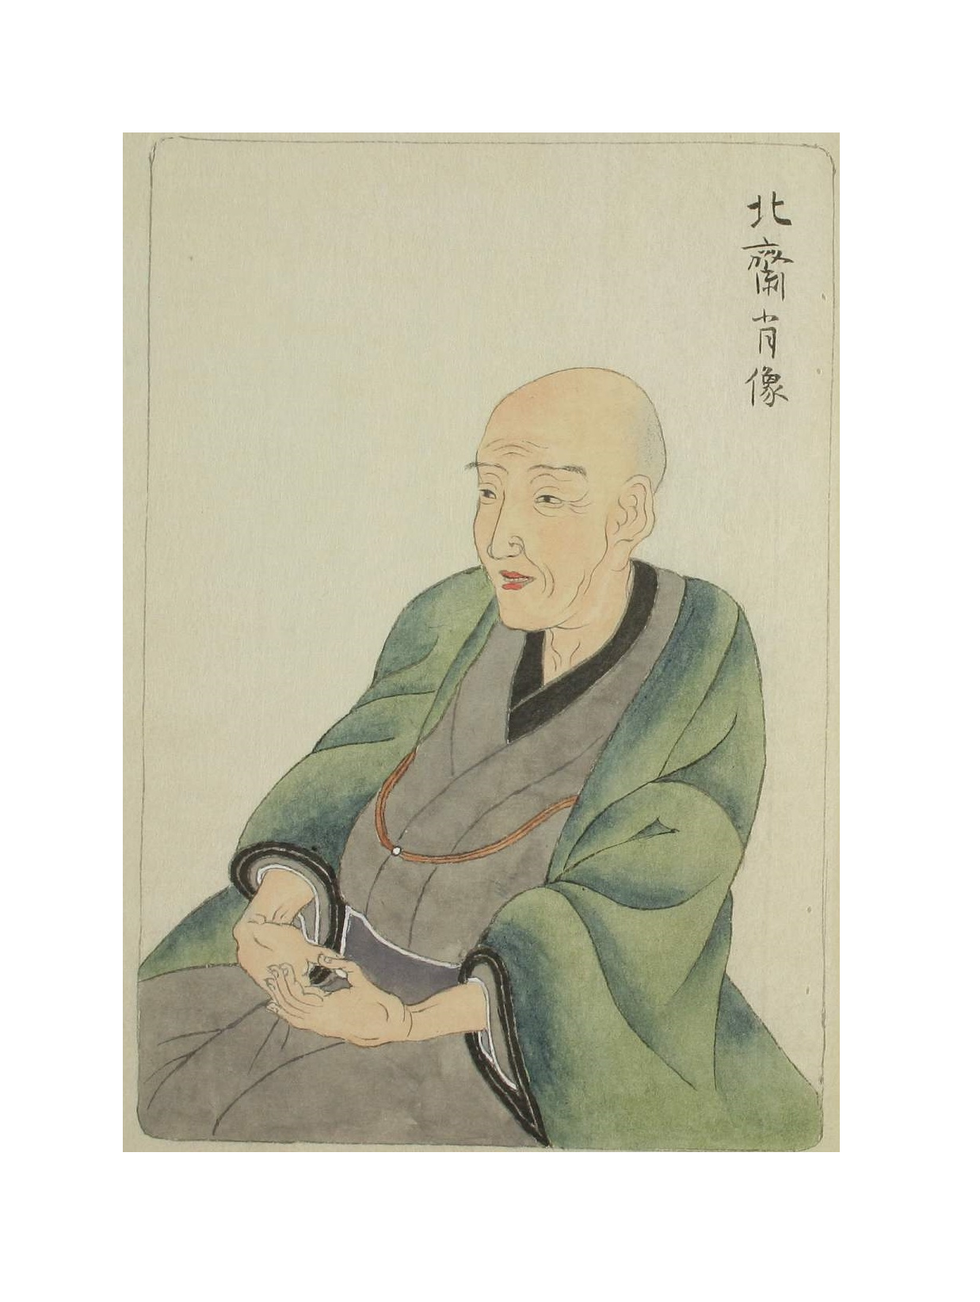 Brief Look Into The Works Of Katsushika Hokusai